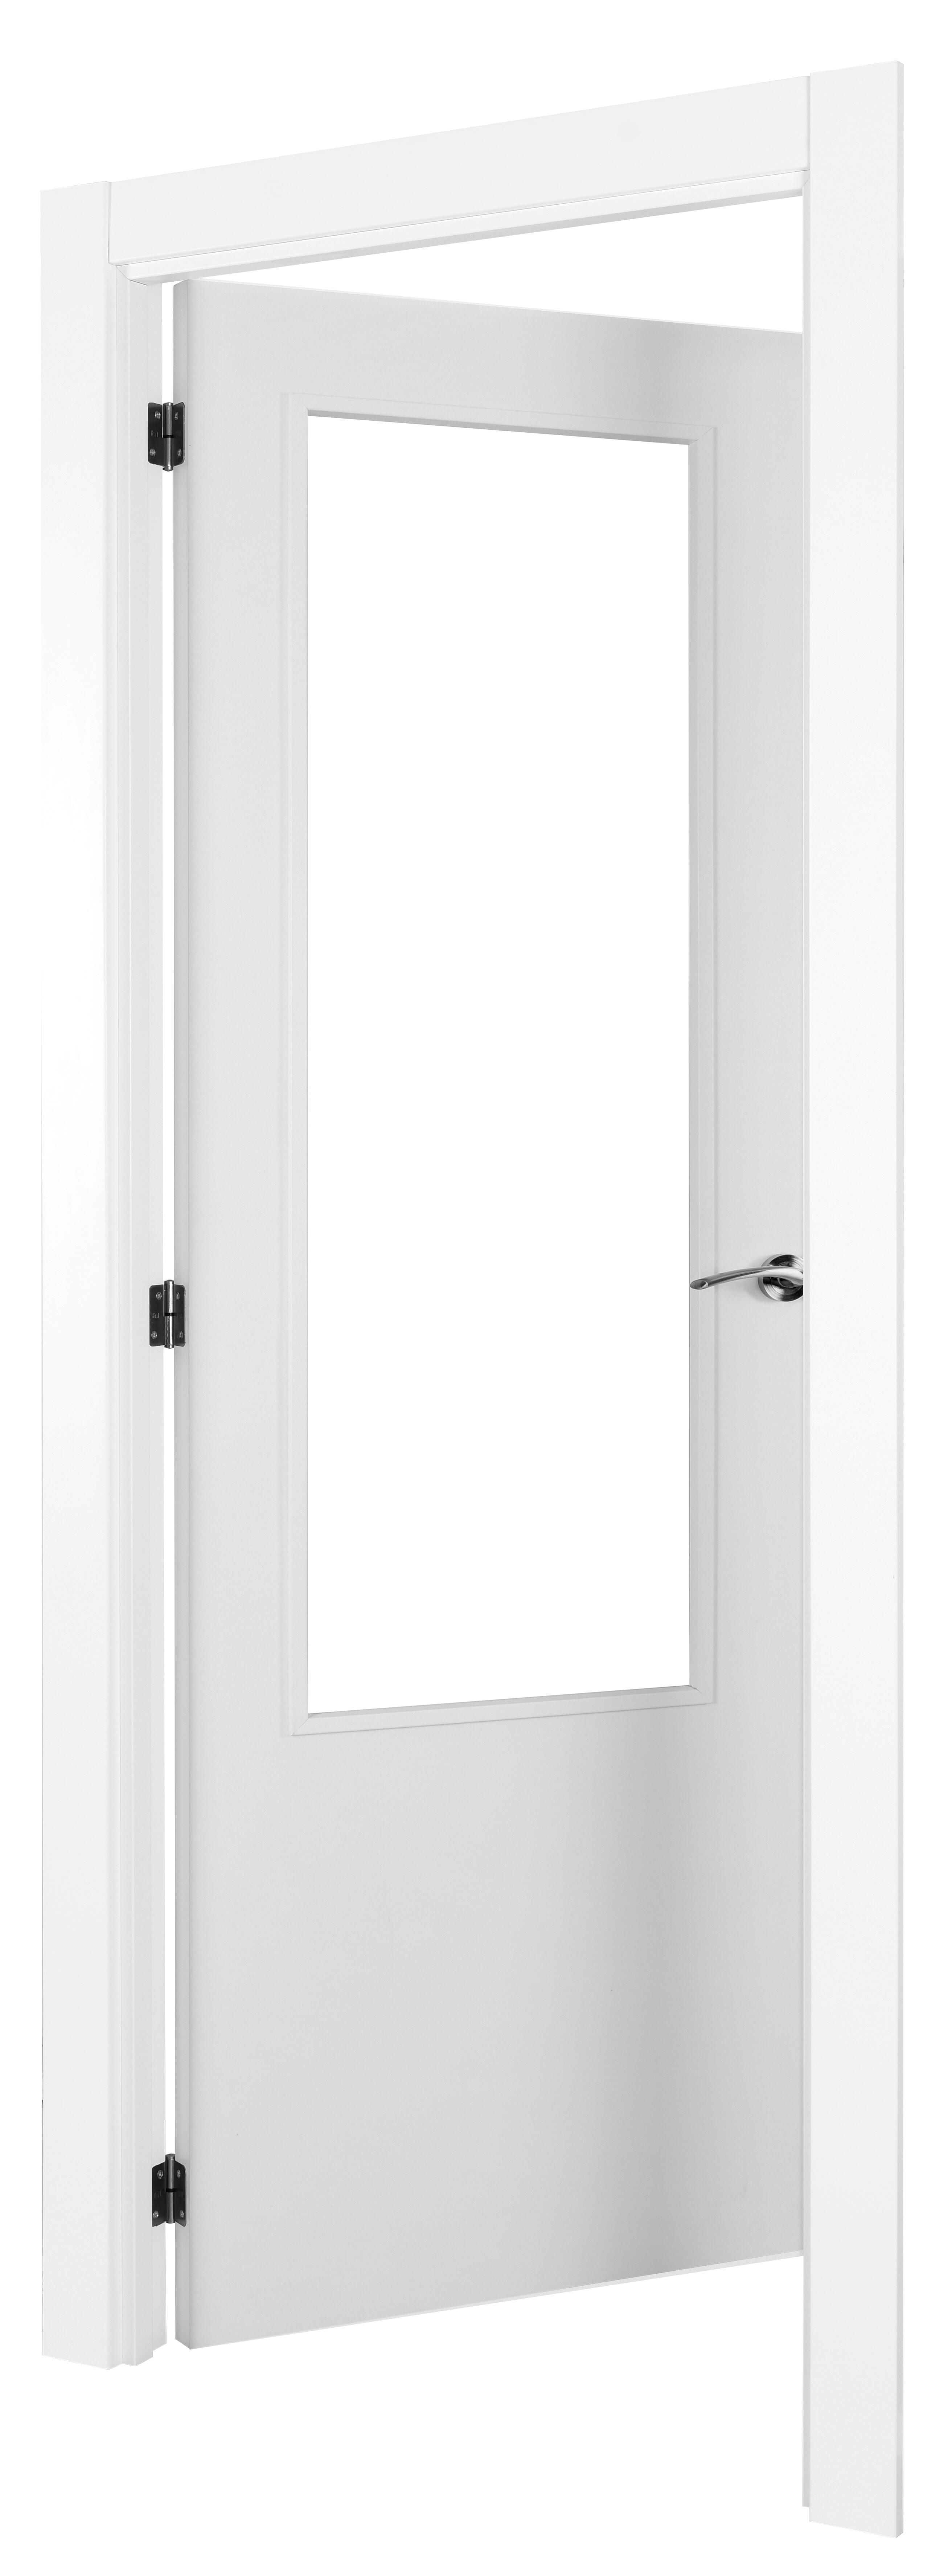 Puerta bari blanco apertura izquierda con cristal 72.5cm